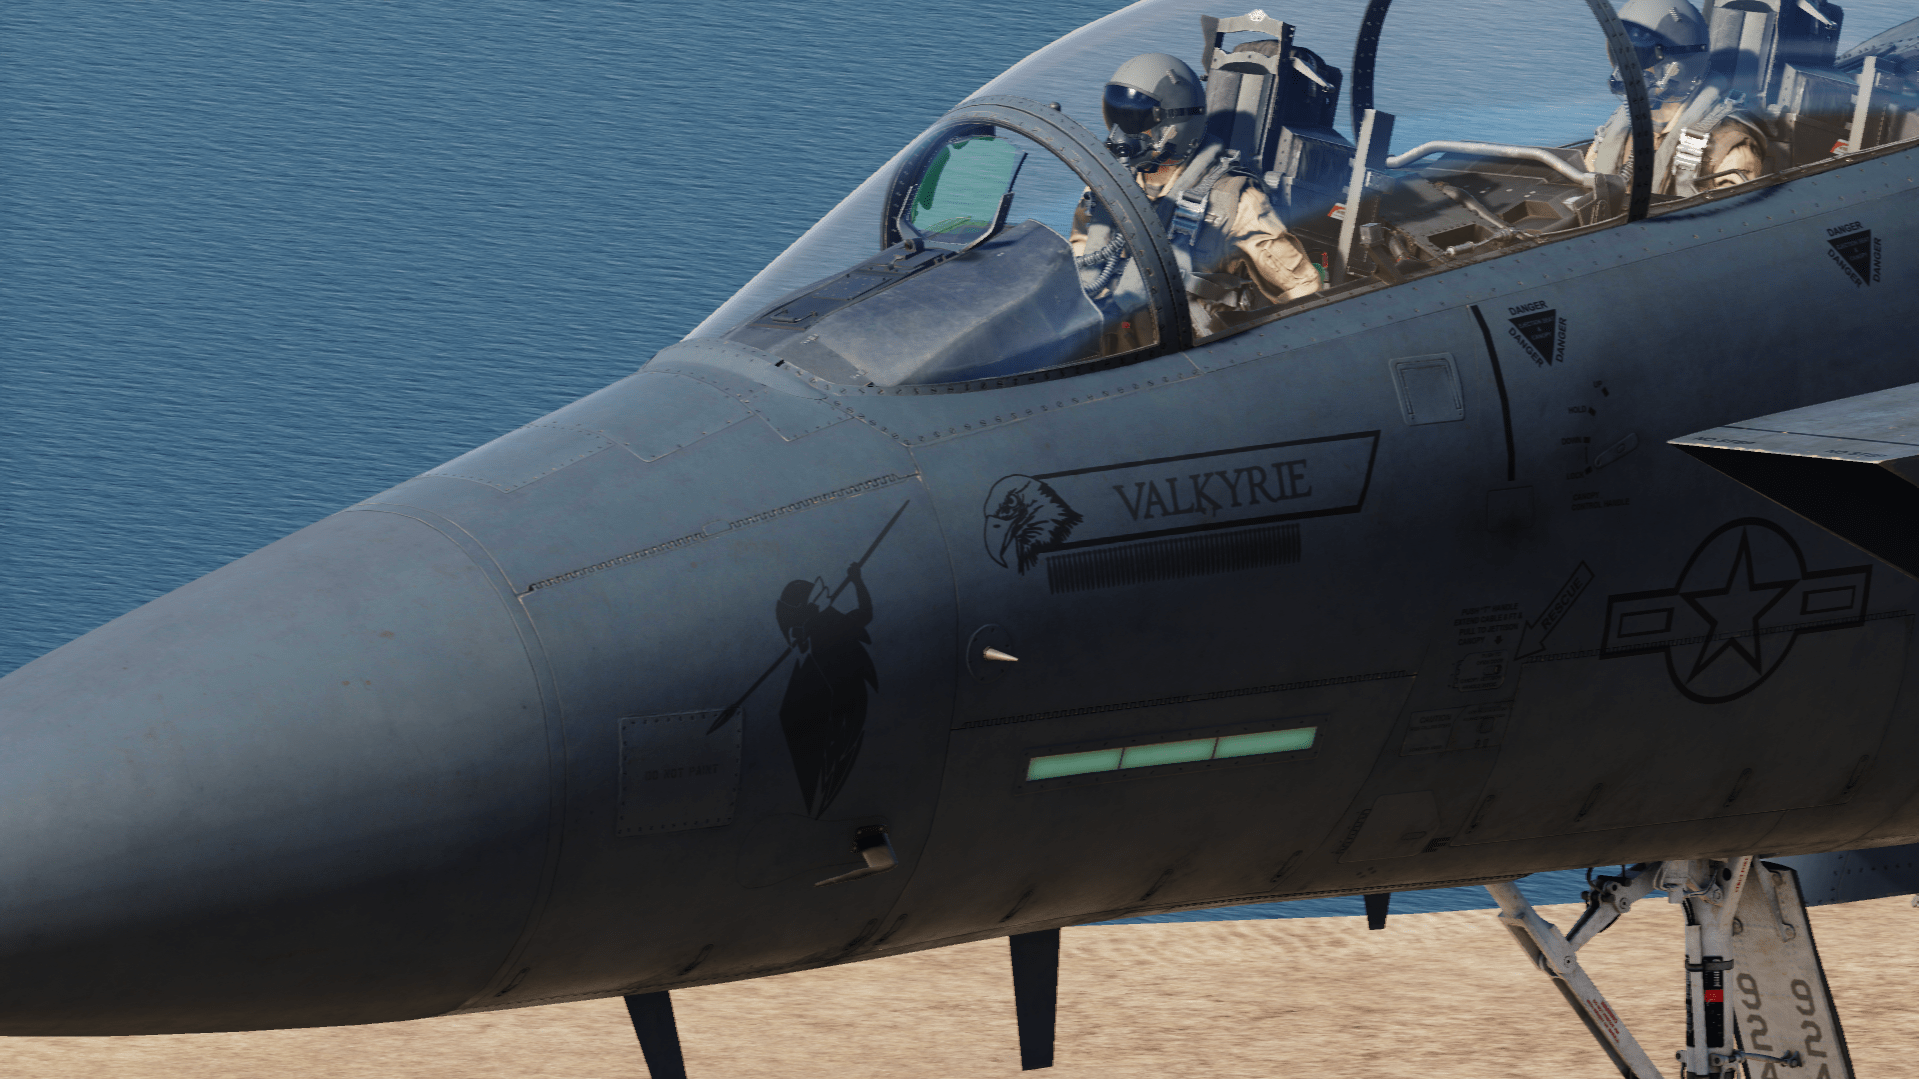 F-15E Strike eagle MO 90-246 "Valkyrie"